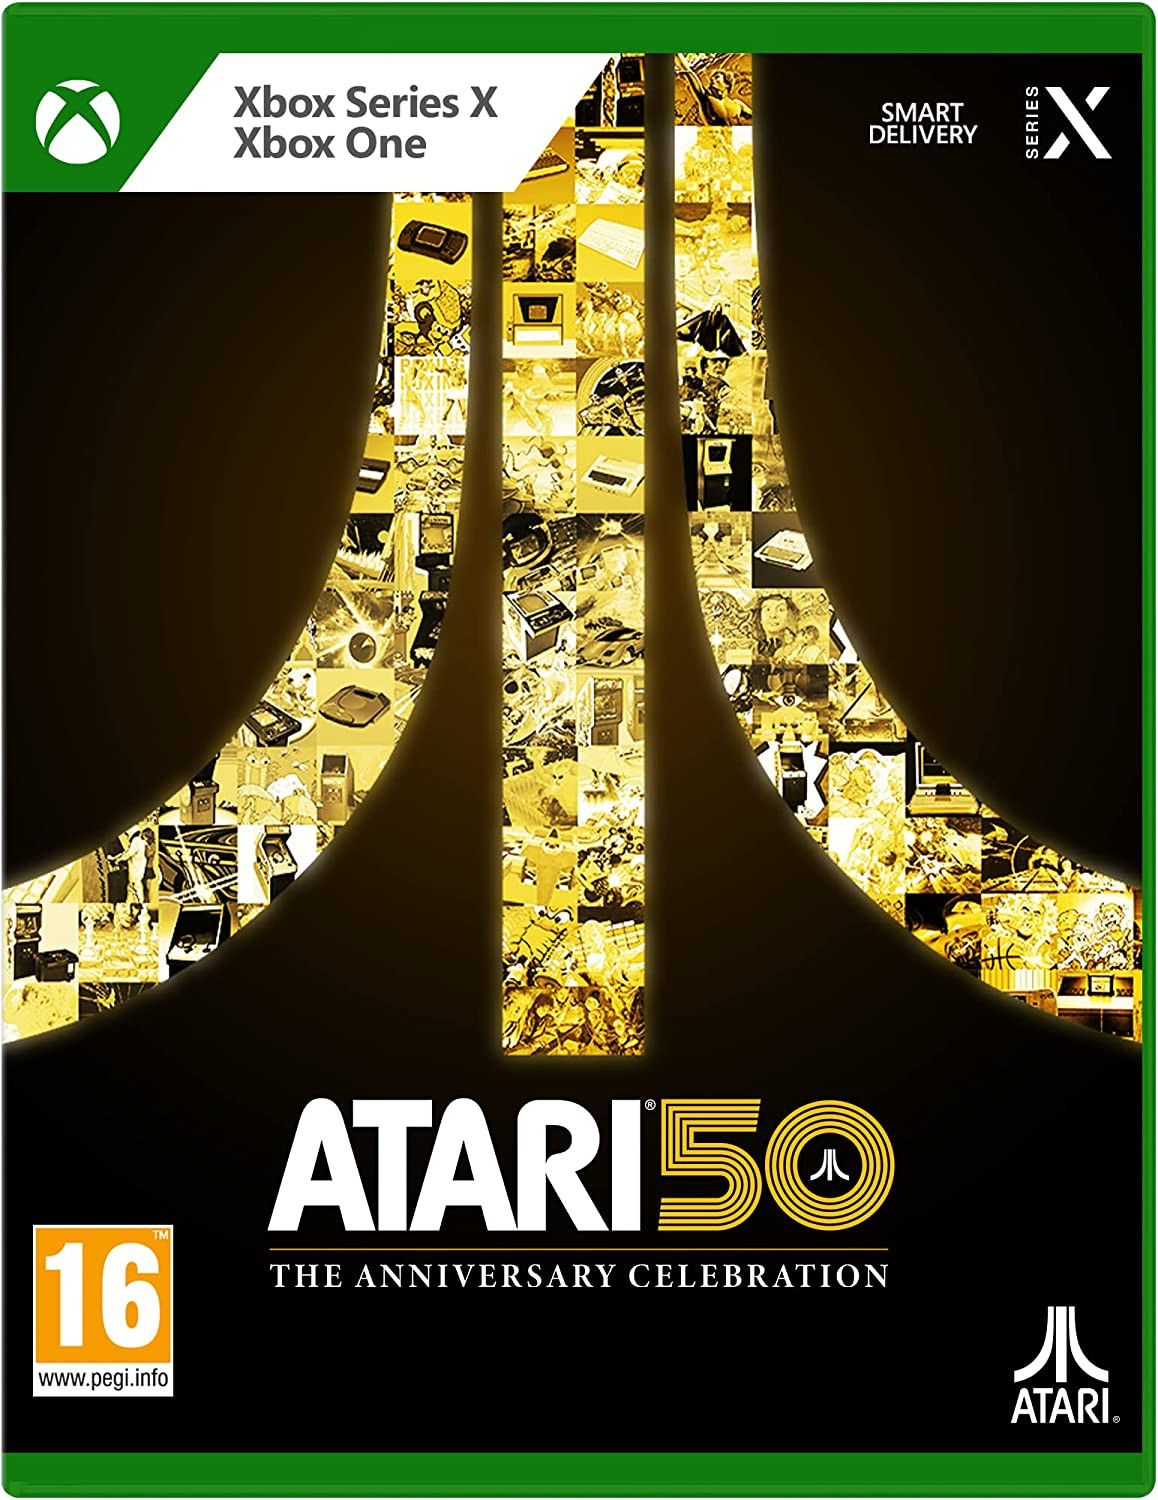 Atari 50: The Anniversary Celebration (Xbox Series X), Atari